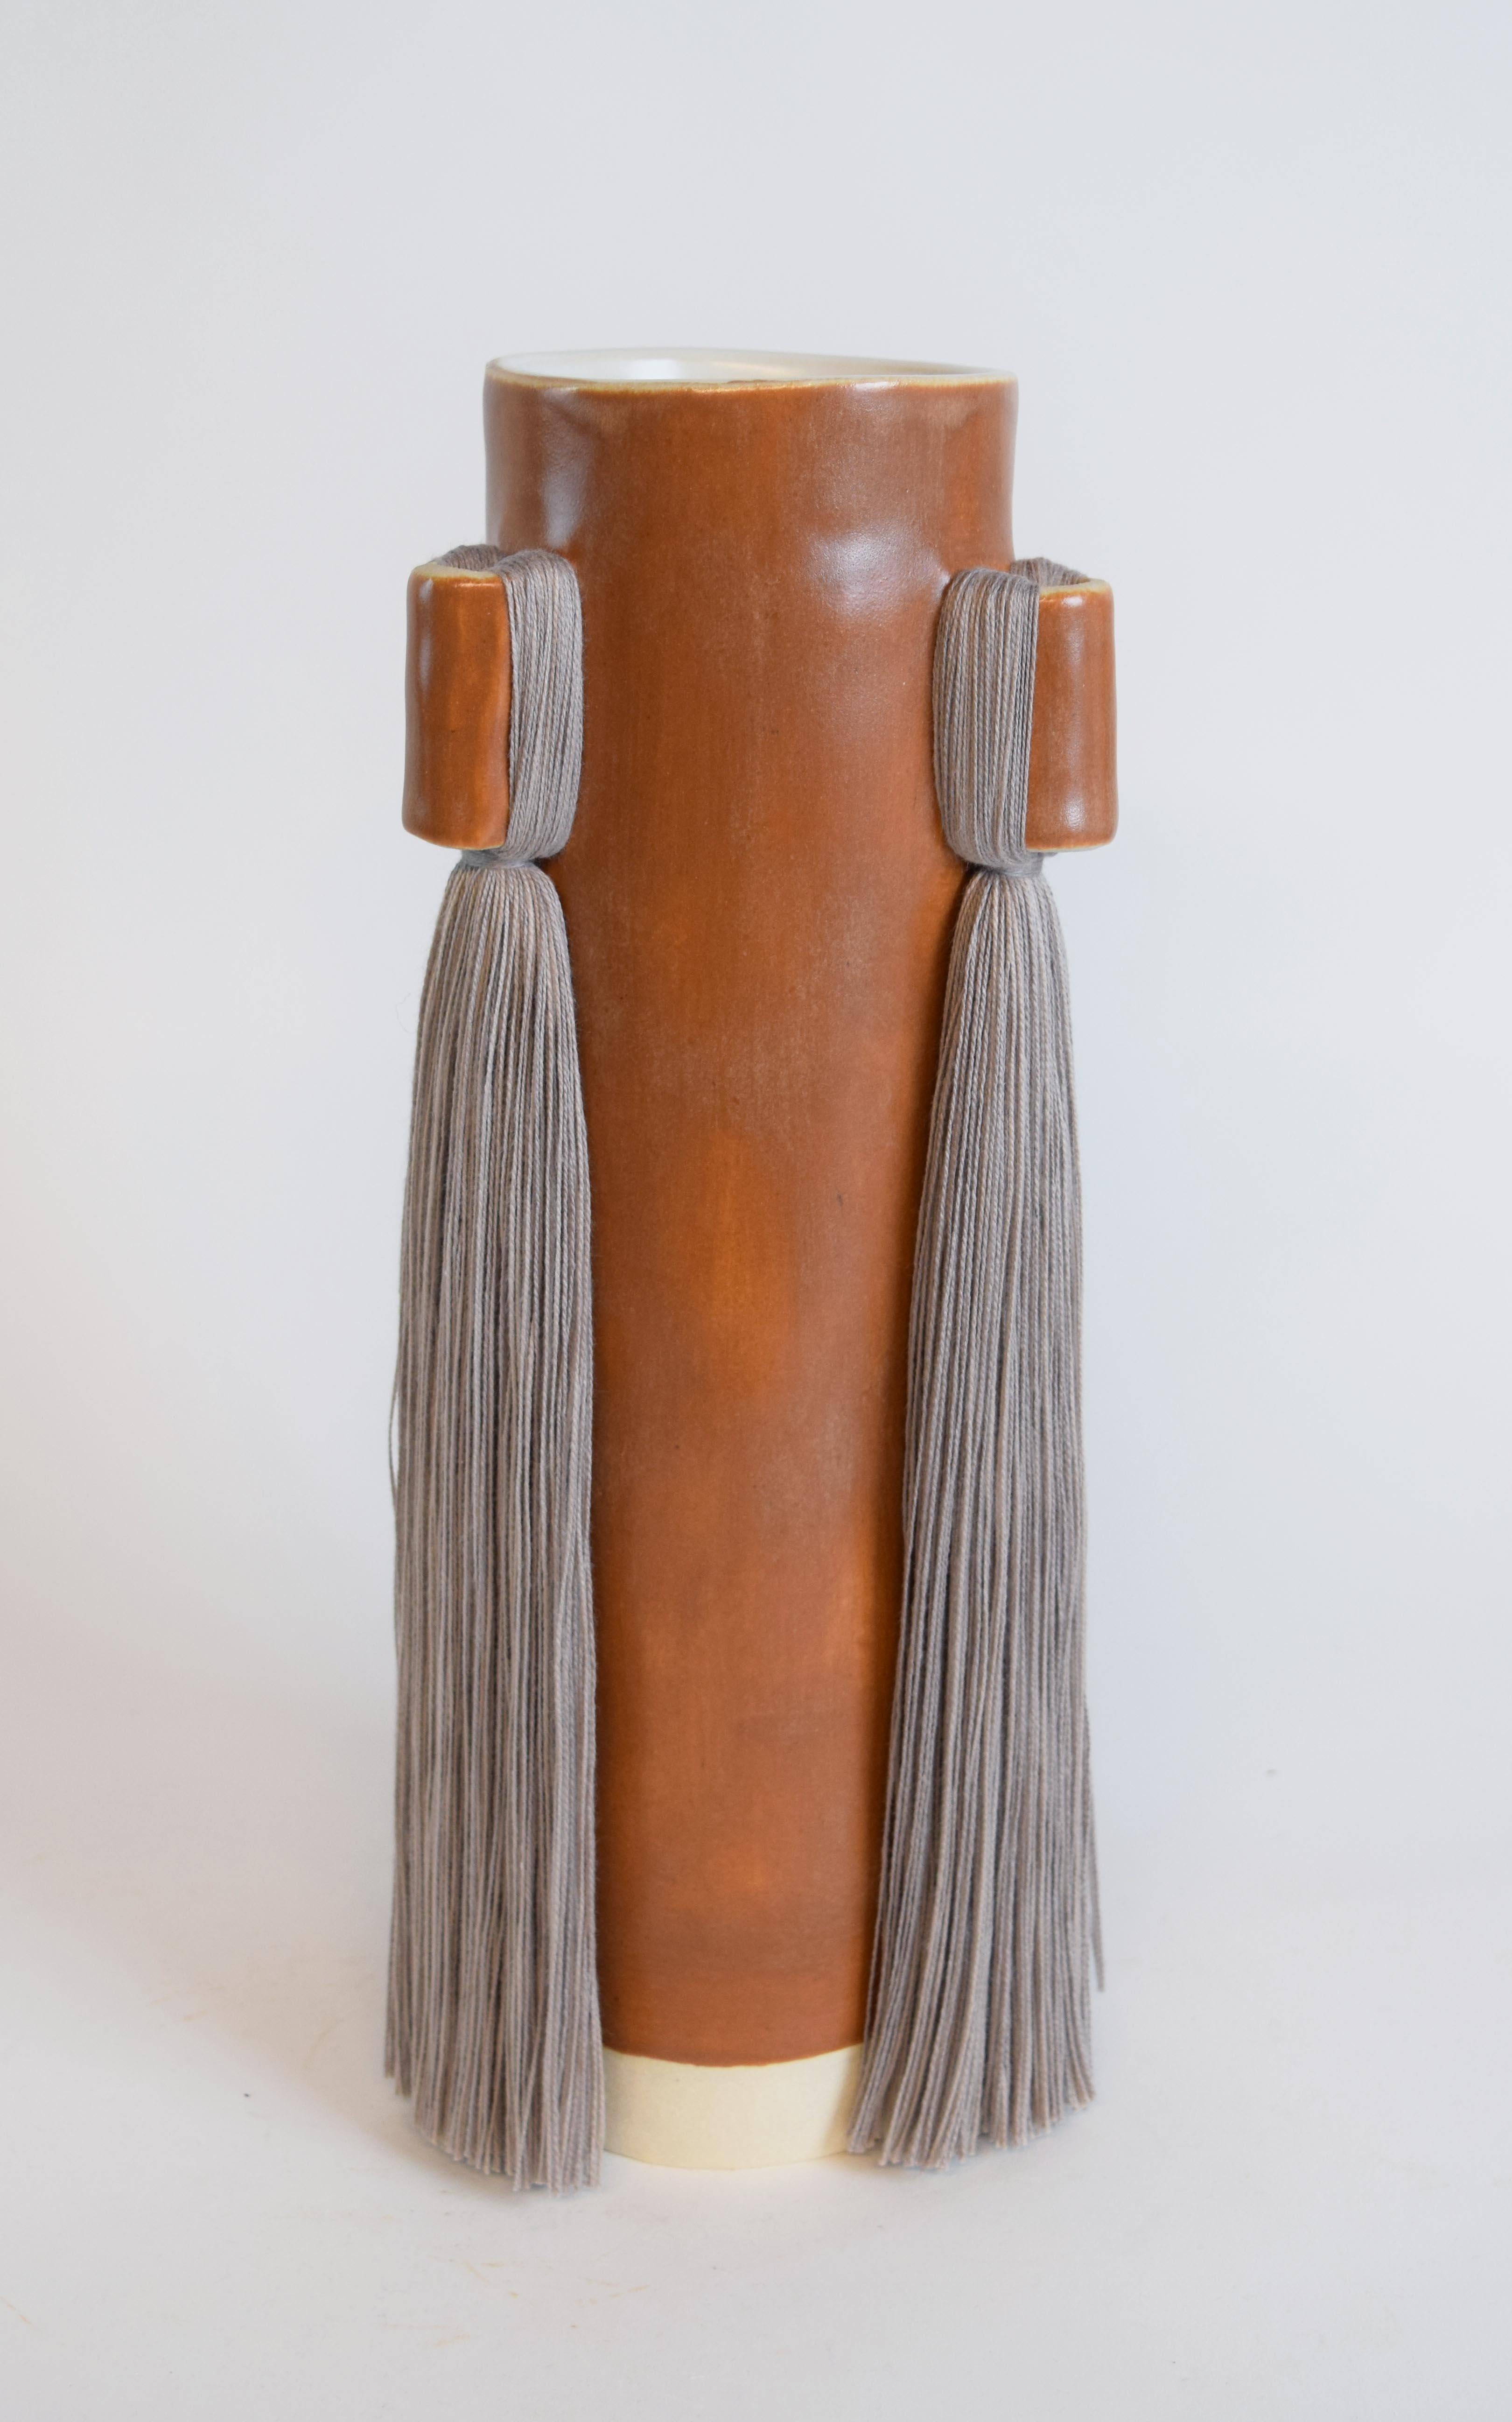 Organic Modern Handmade Ceramic Vase #607 in Satin Brown Glaze with Gray Cotton Fringe Detail For Sale